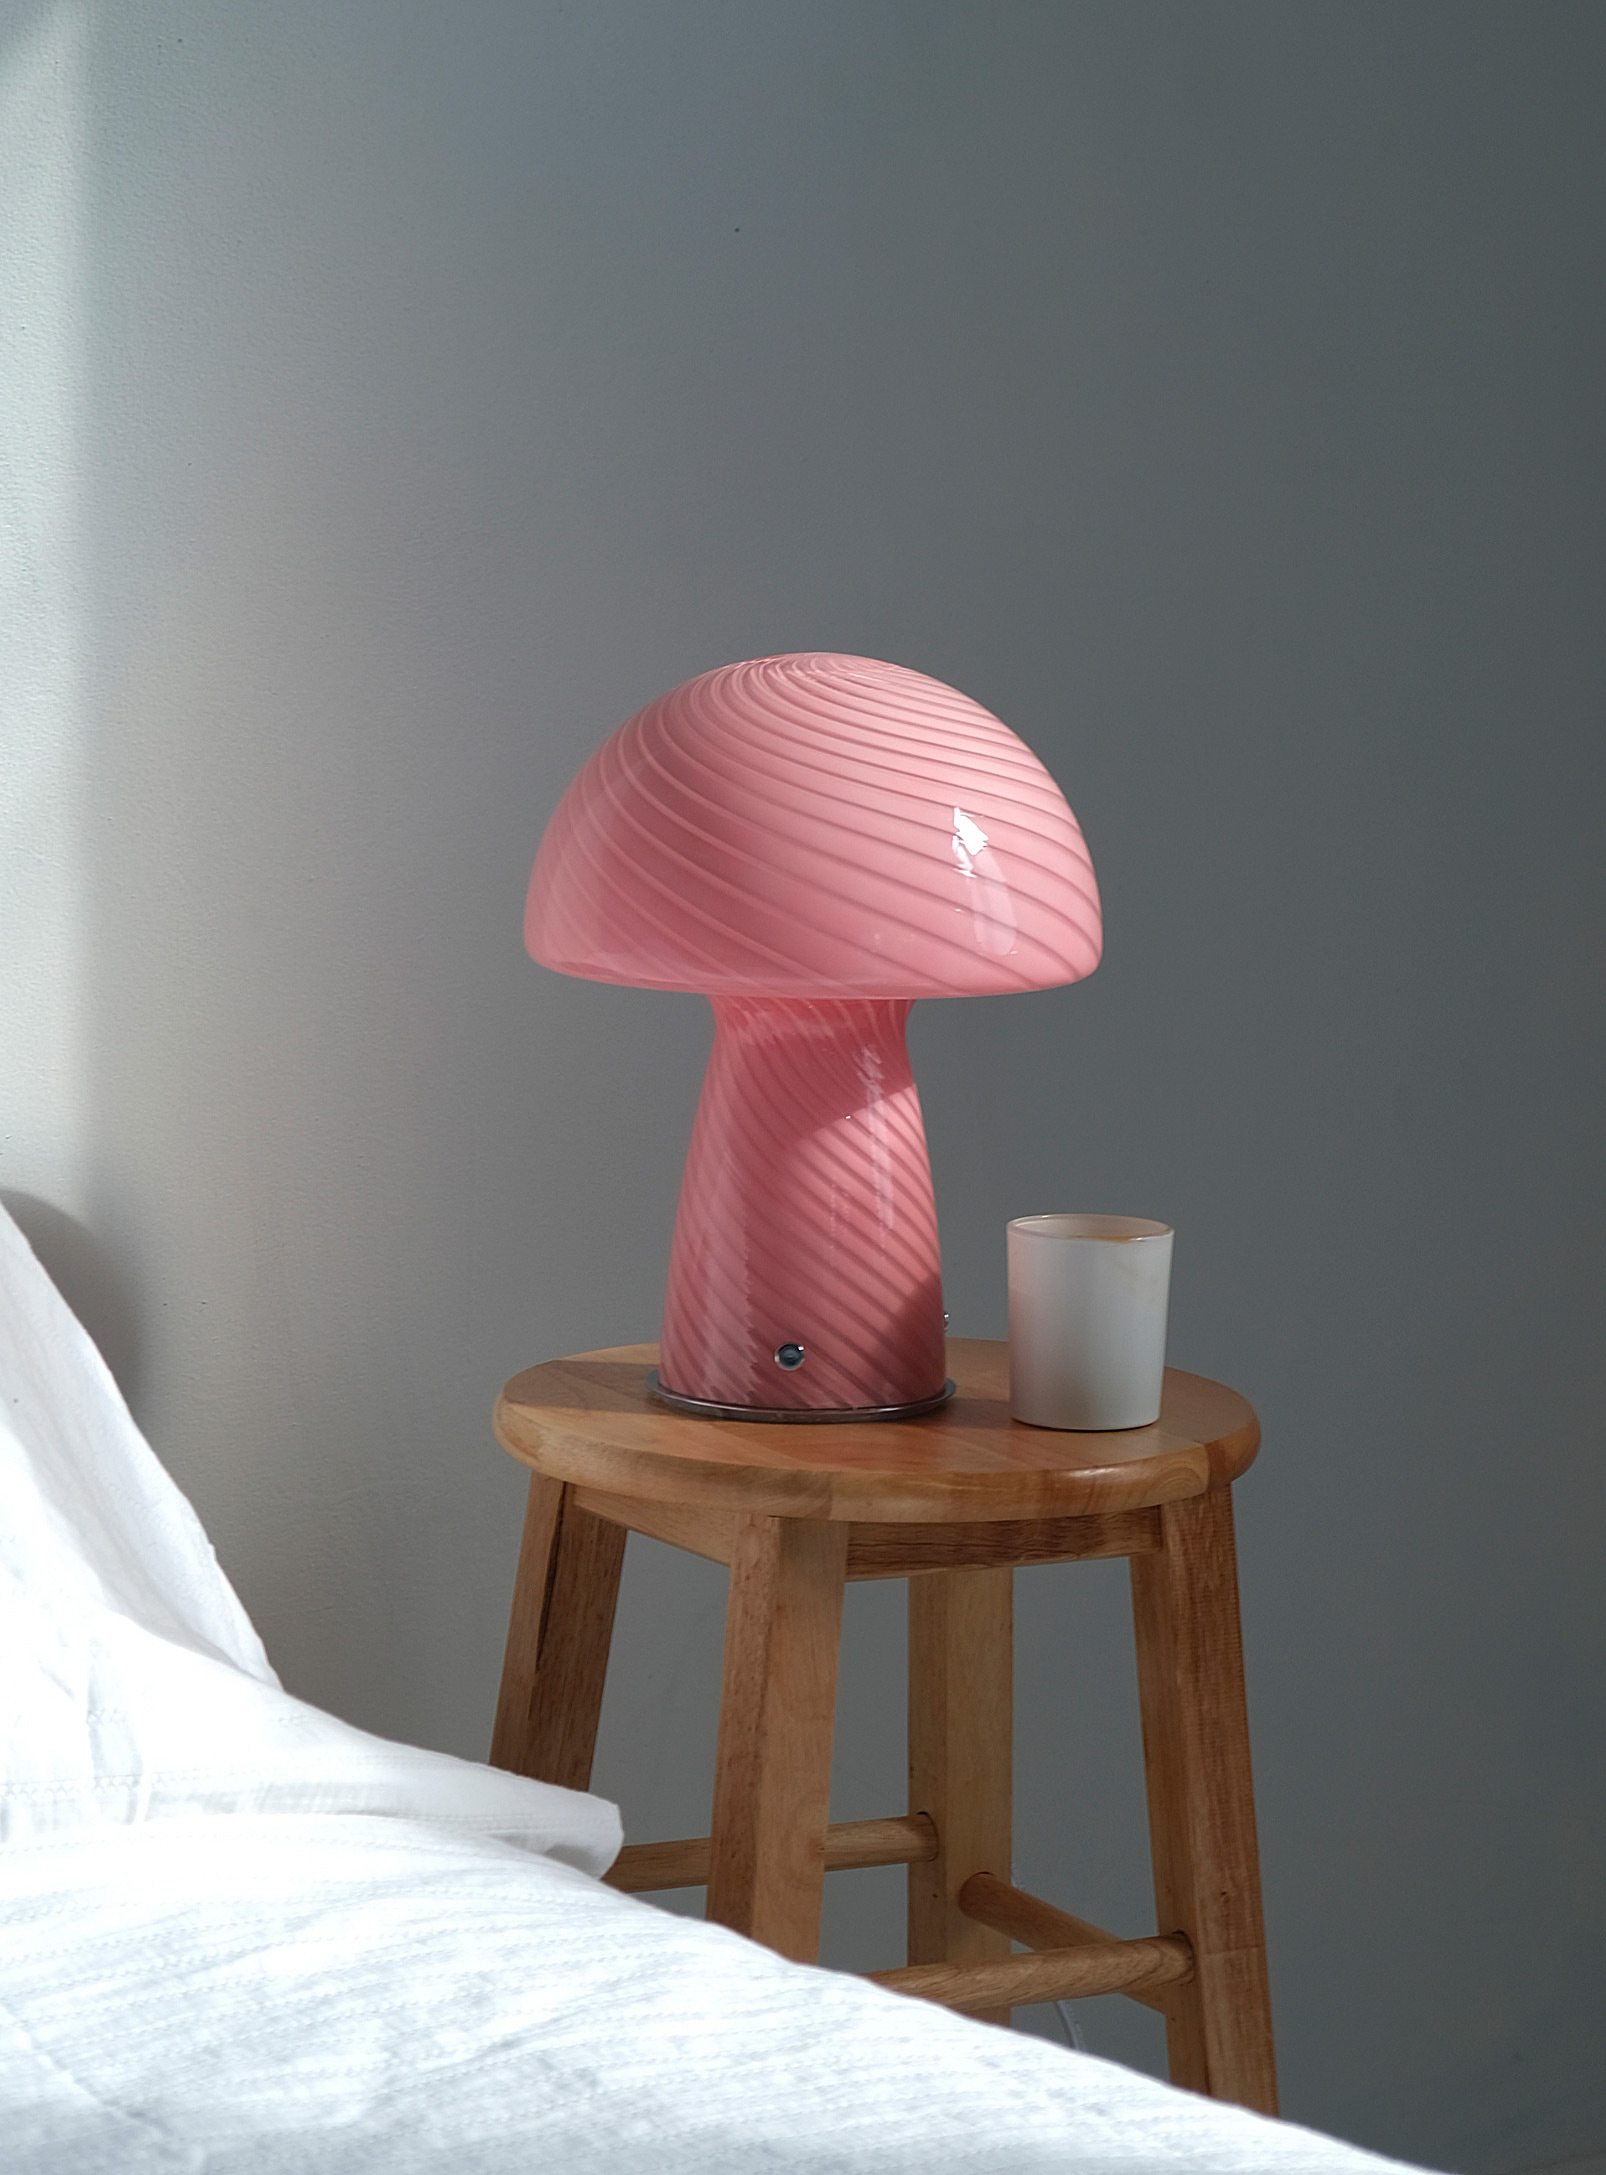 Humber Large Mushroom Table Lamp In Pink